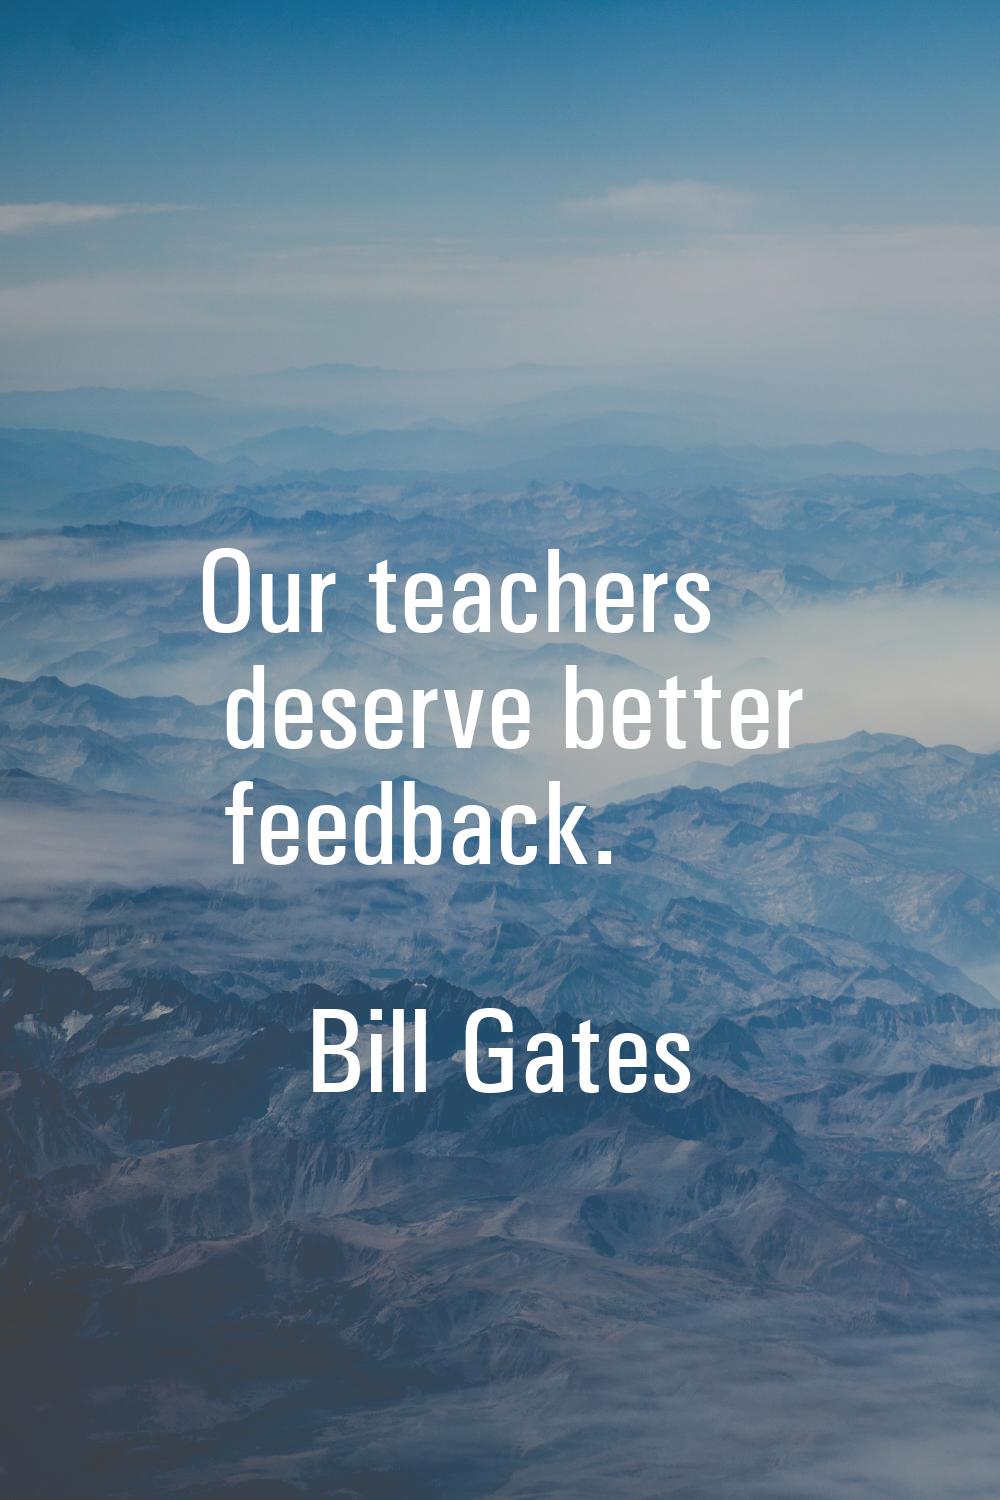 Our teachers deserve better feedback.